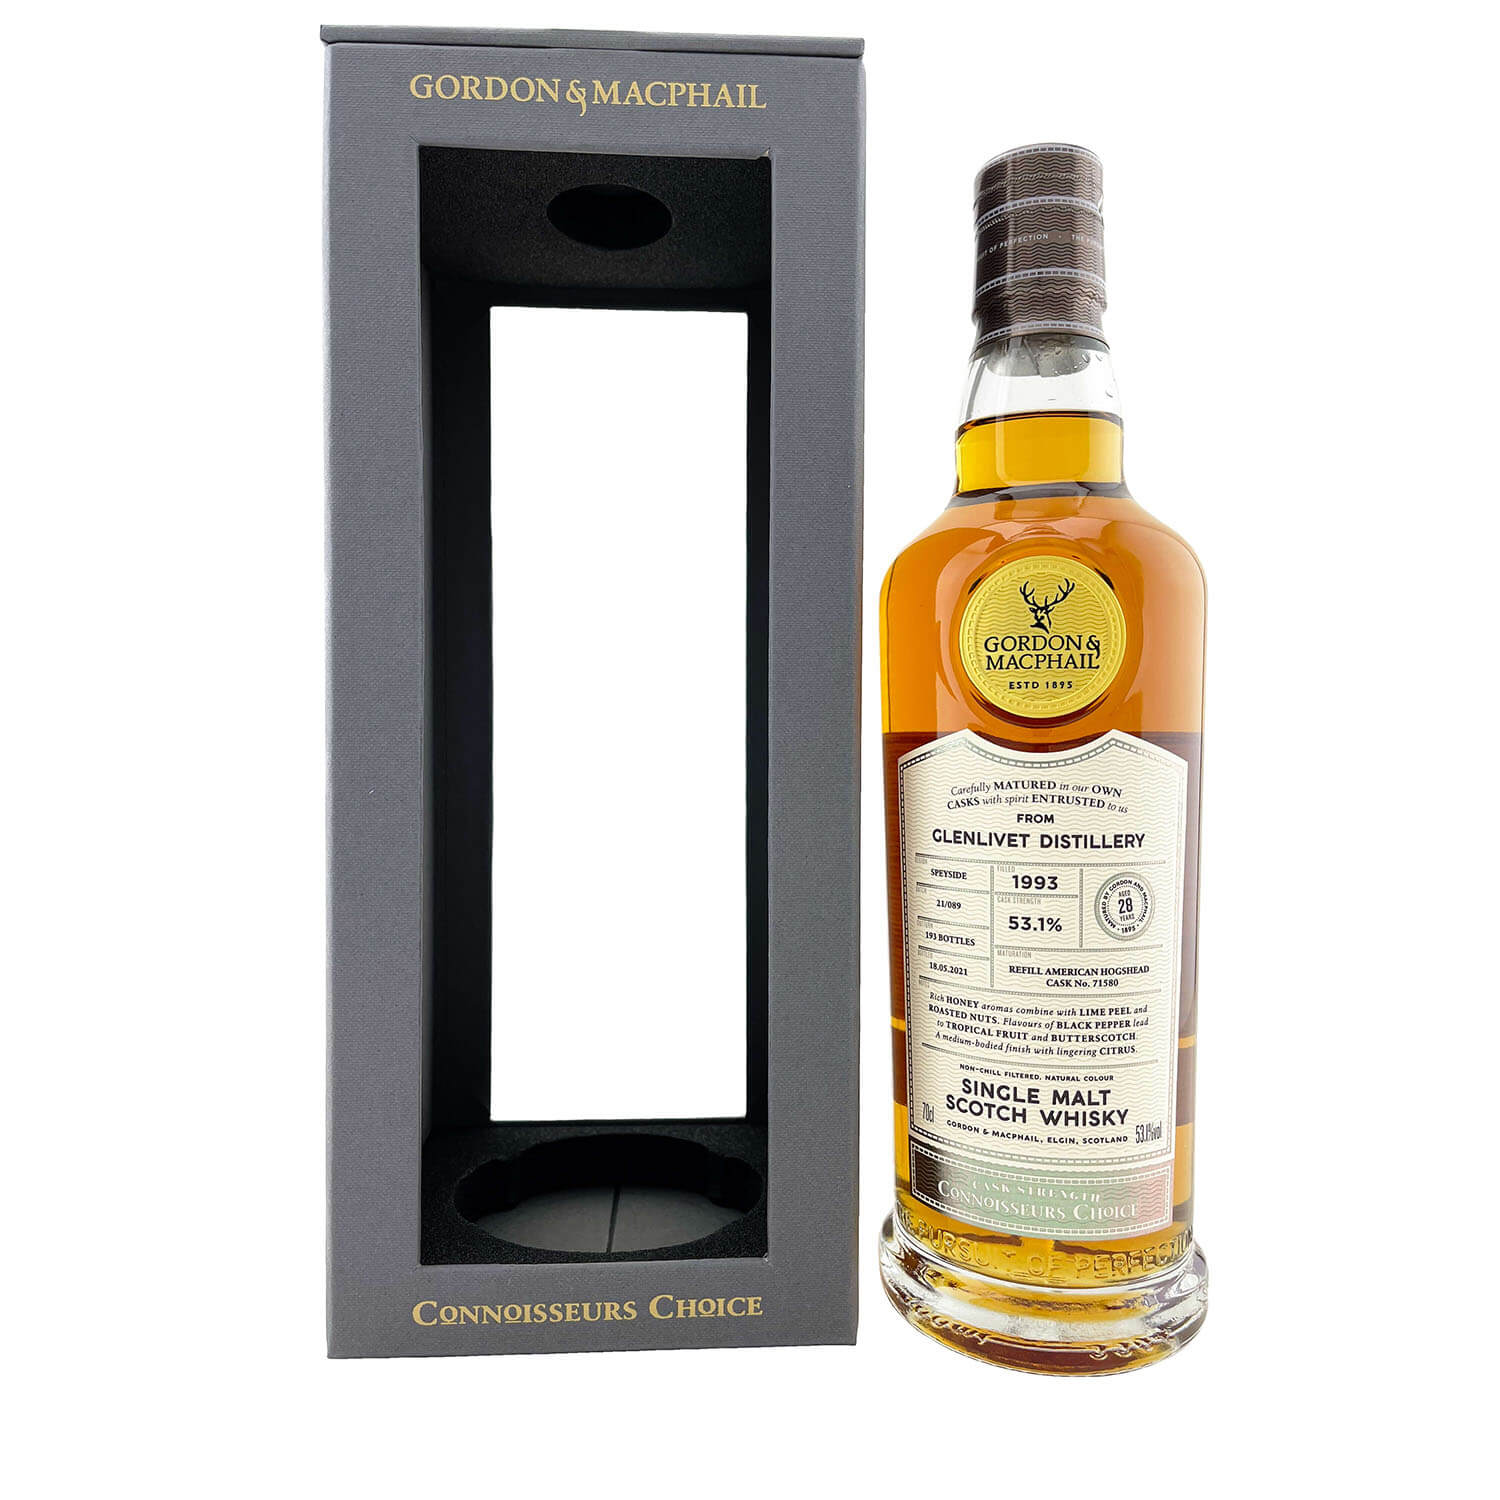 Gordon & MacPhail ‘Connoisseurs Choice’ 1993 Glenlivet Distillery 28 Year Old 700ml